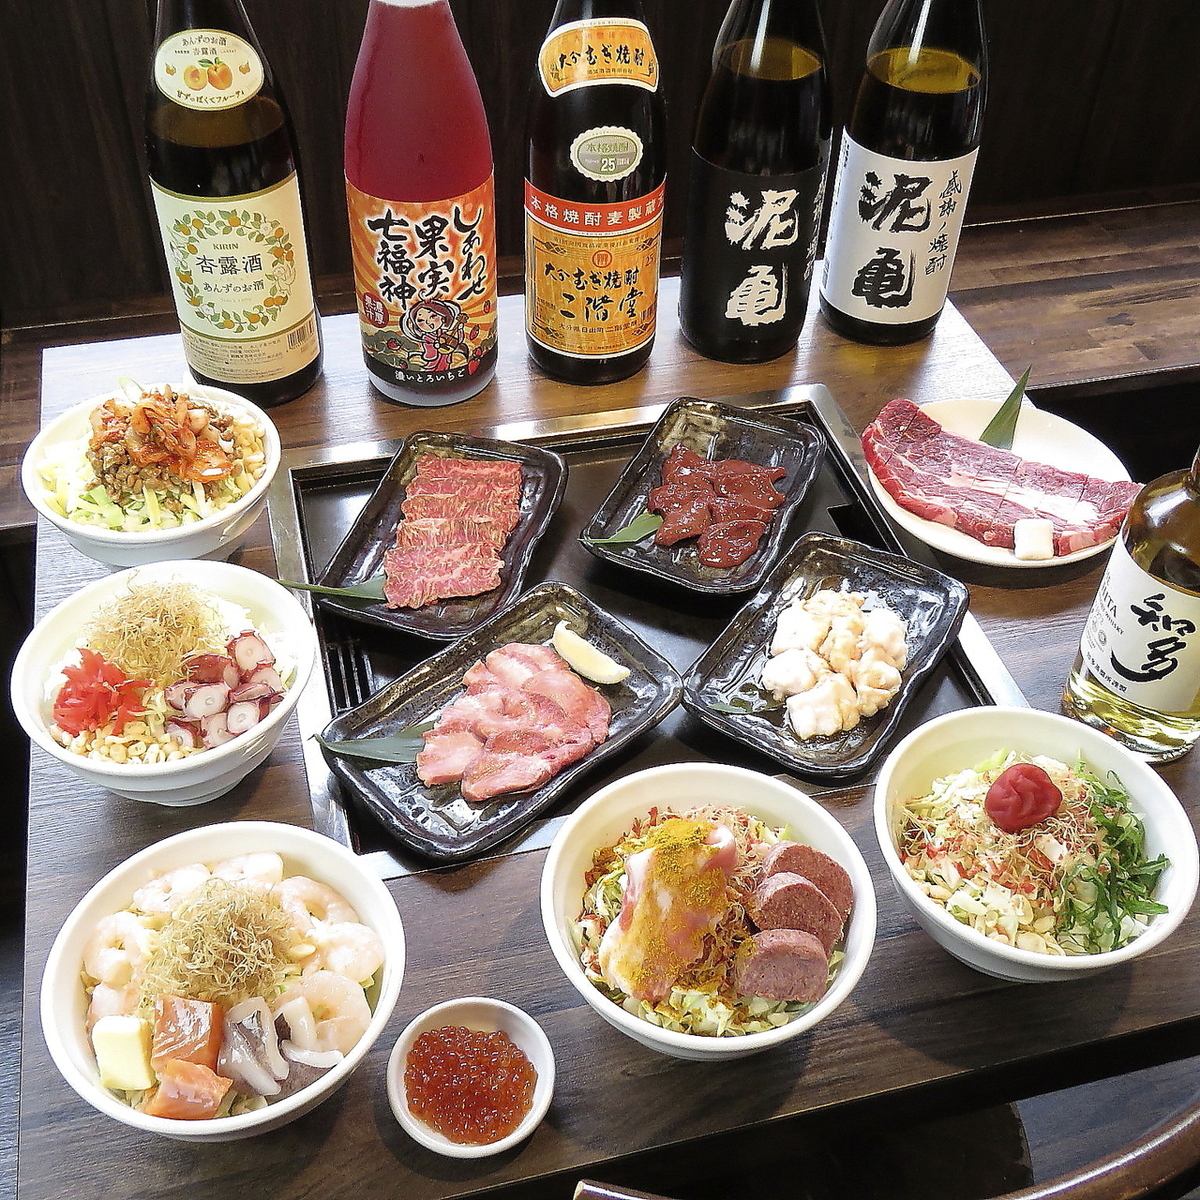 Kinshicho / Sumiyoshi / Monja / Okonomiyaki / Meat dishes / Teppanyaki / Steak / Seafood / Sashimi / Banquet / Charter